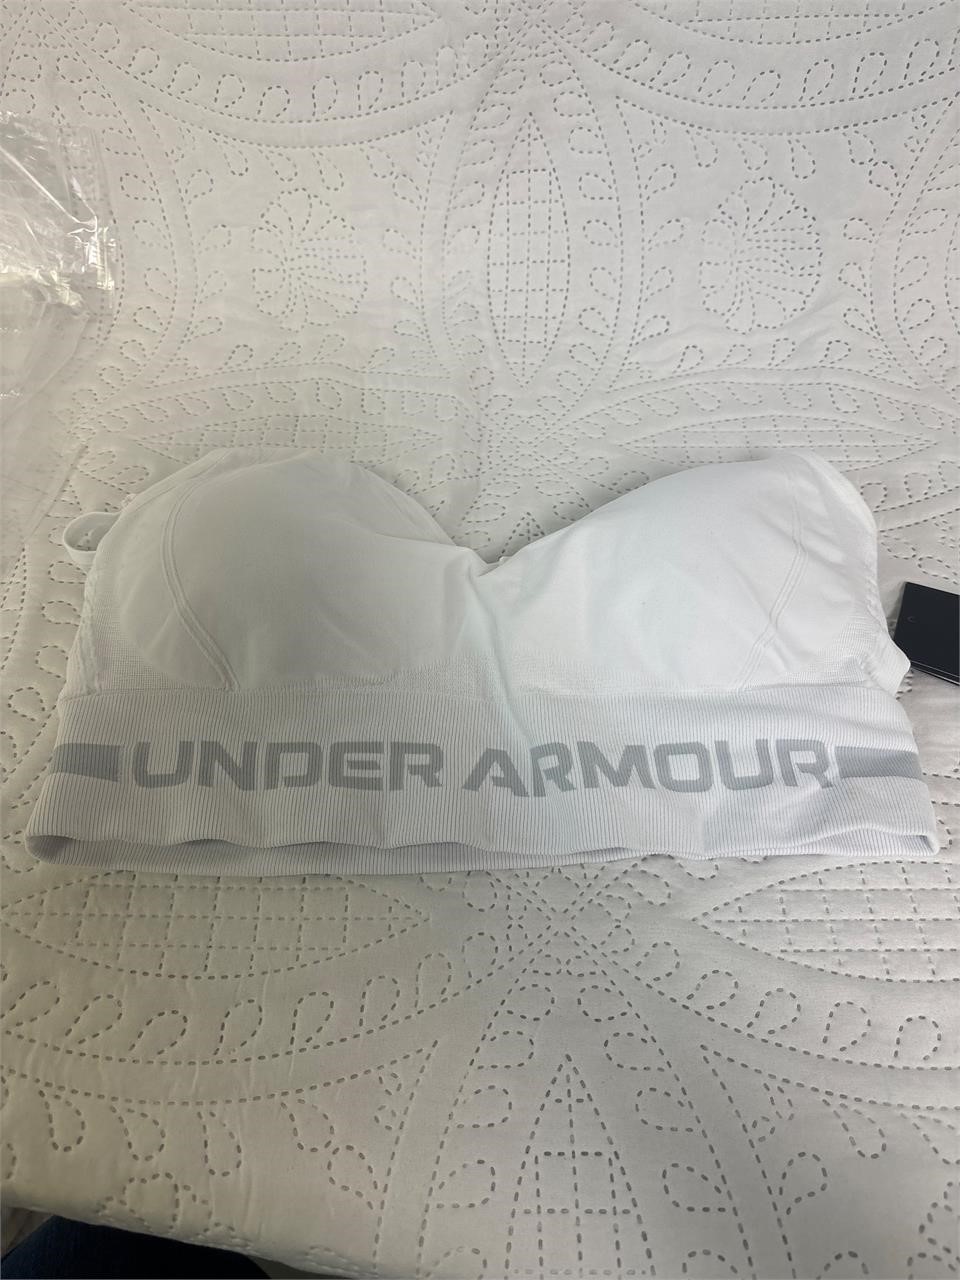 Under armor xl sports bra